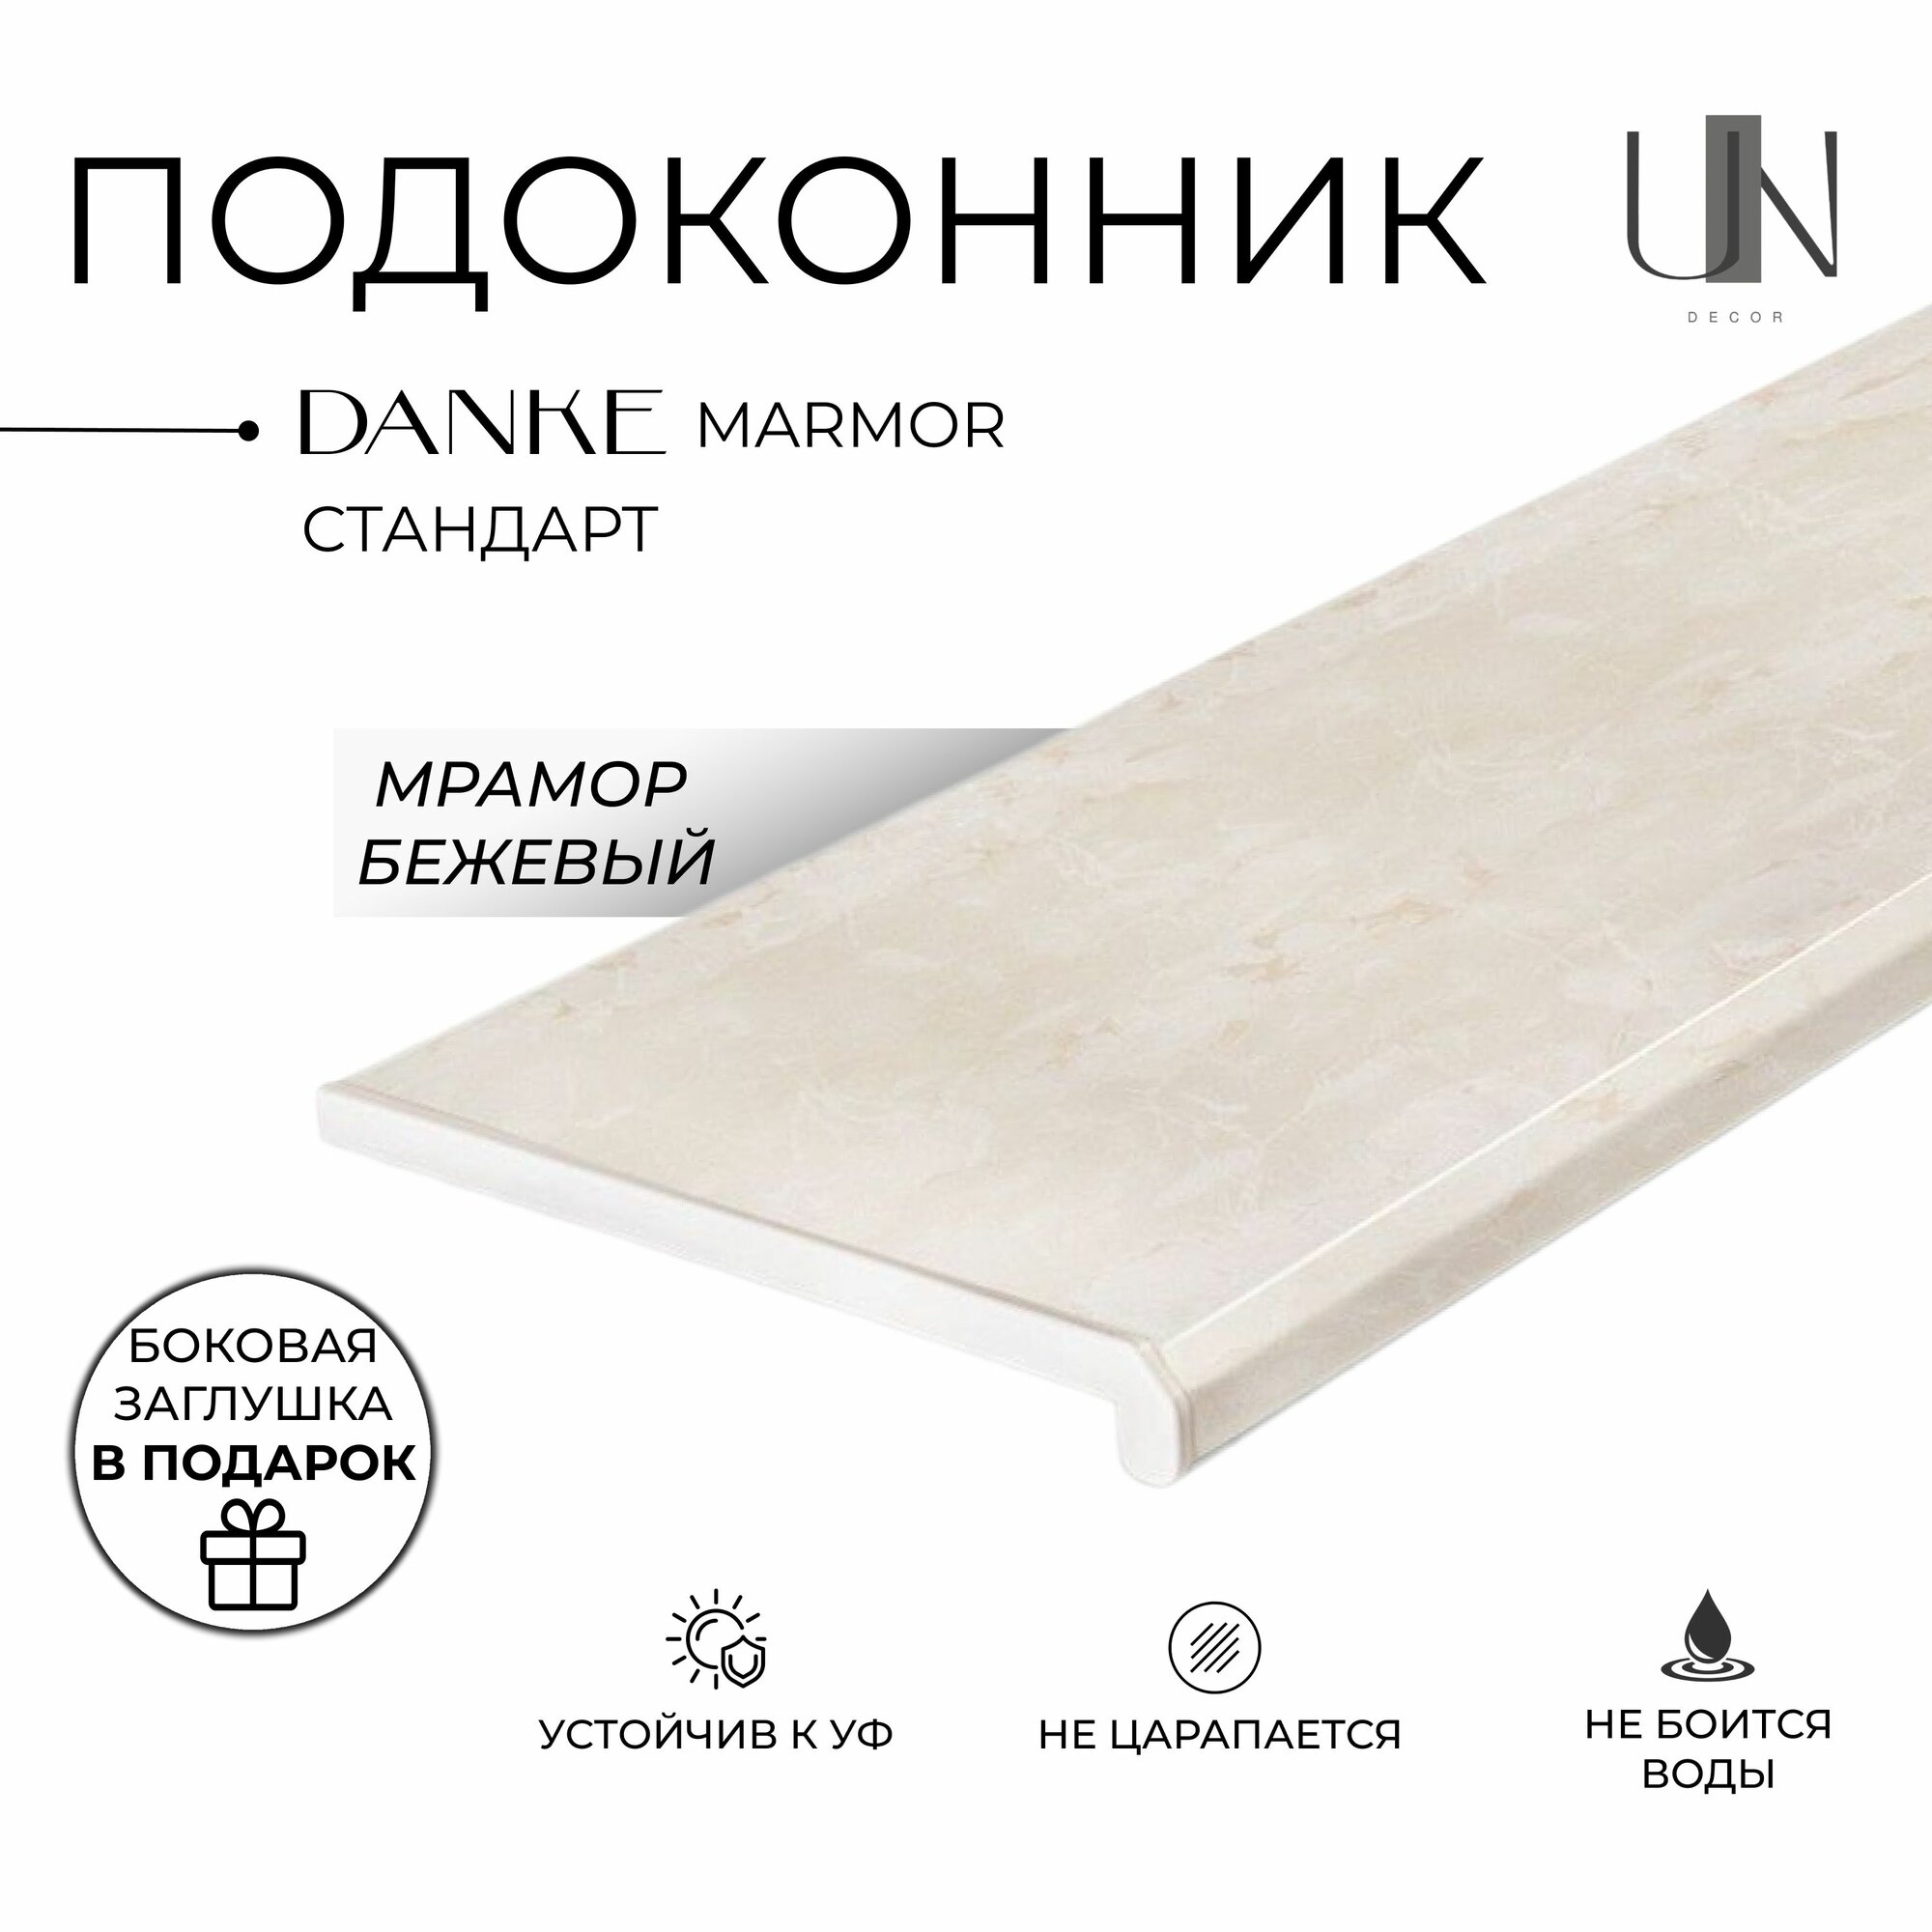 Подоконник Данке Мрамор матовый Marmor , коллекция DANKE STANDARD 15 см х 0,7 м. пог. (150мм*700мм)